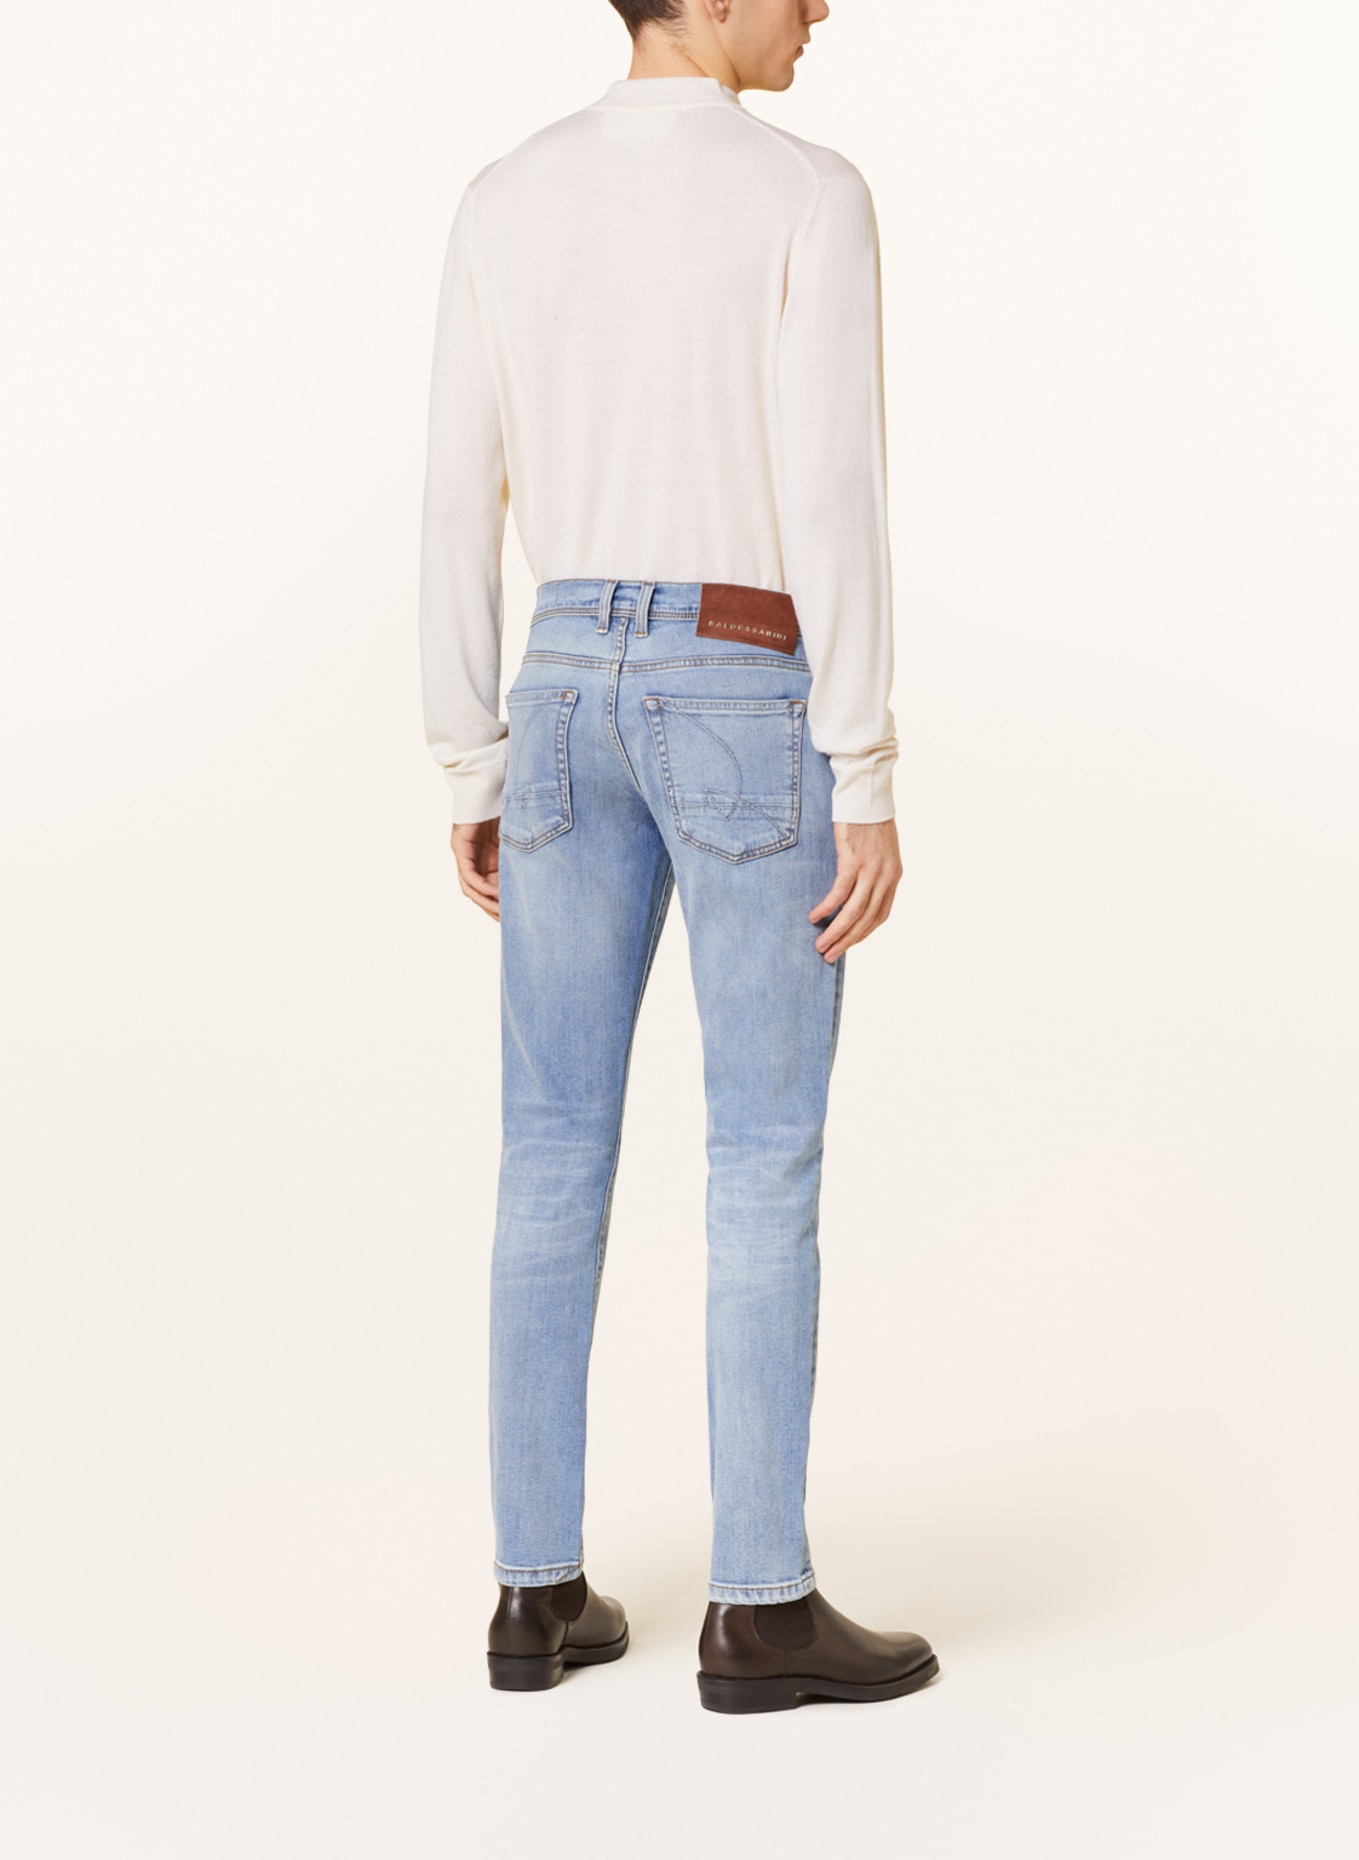 BALDESSARINI Jeans Tapered Fit, Farbe: 6846 light blue used mustache (Bild 3)